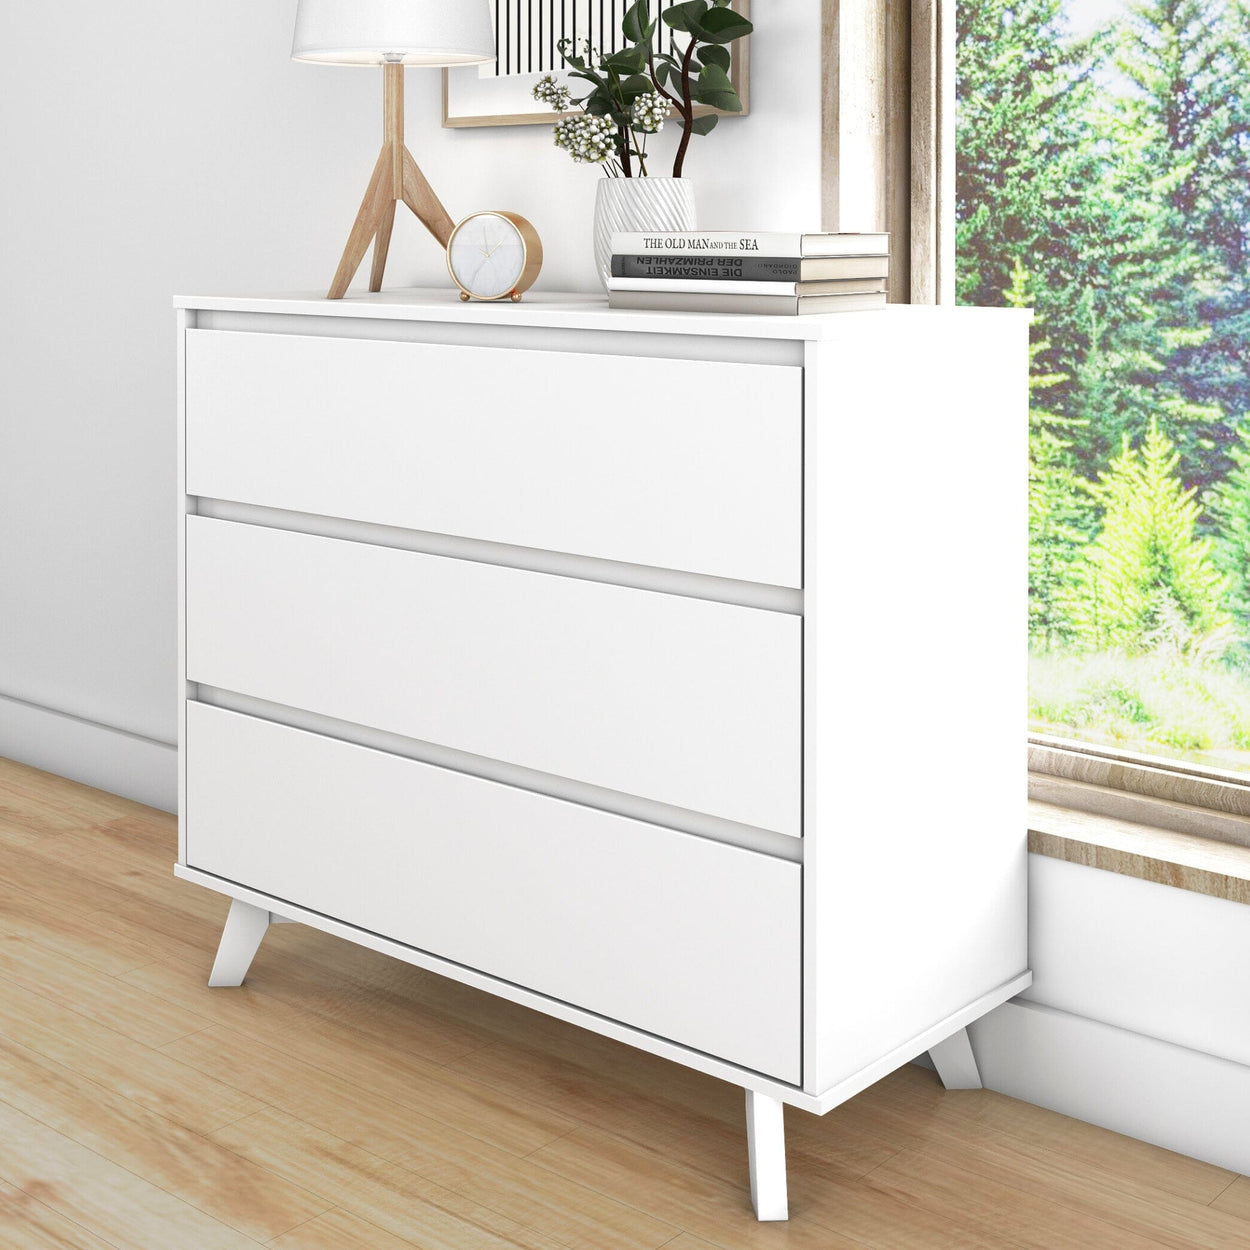 210003-002 : Furniture Scandinavian 3-Drawer Dresser, White